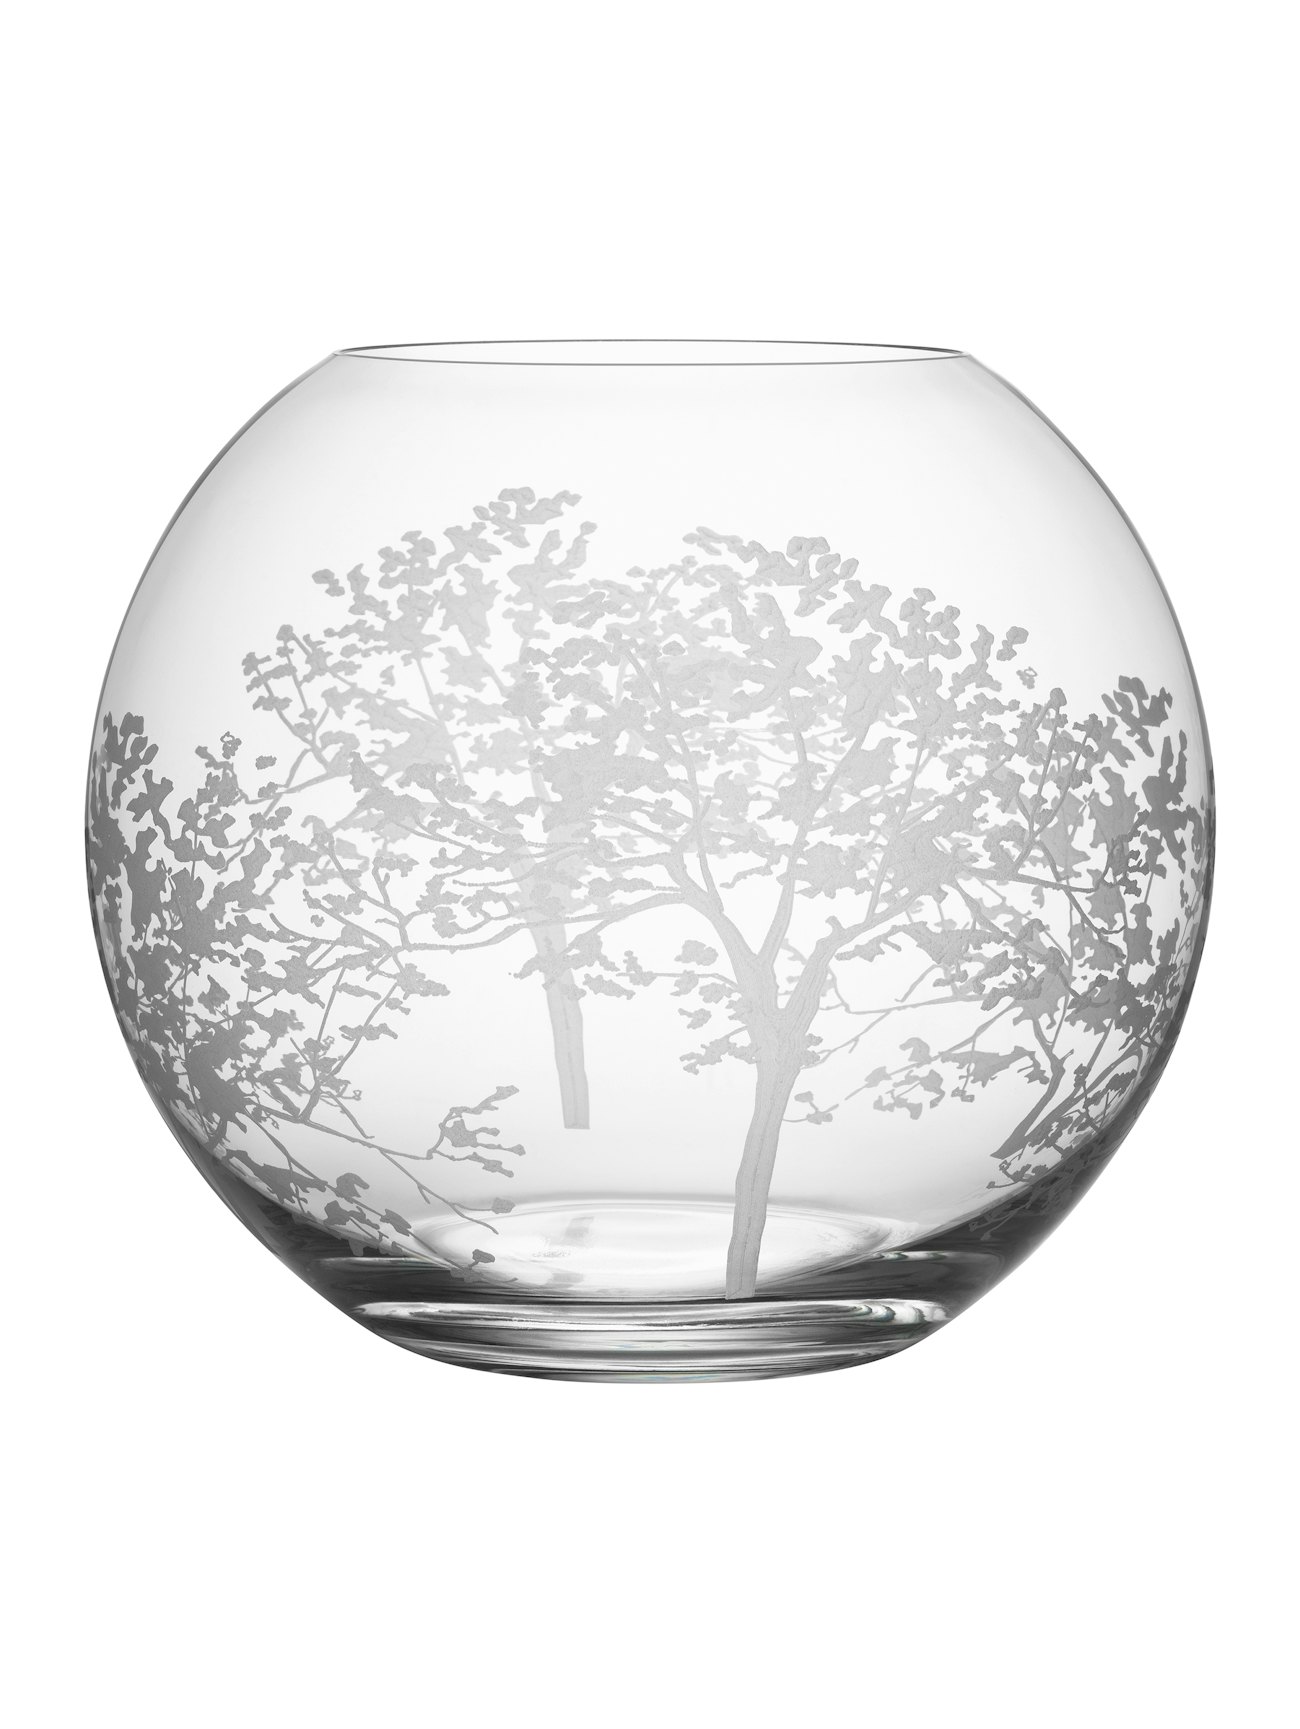 Organic globe vase 205mm